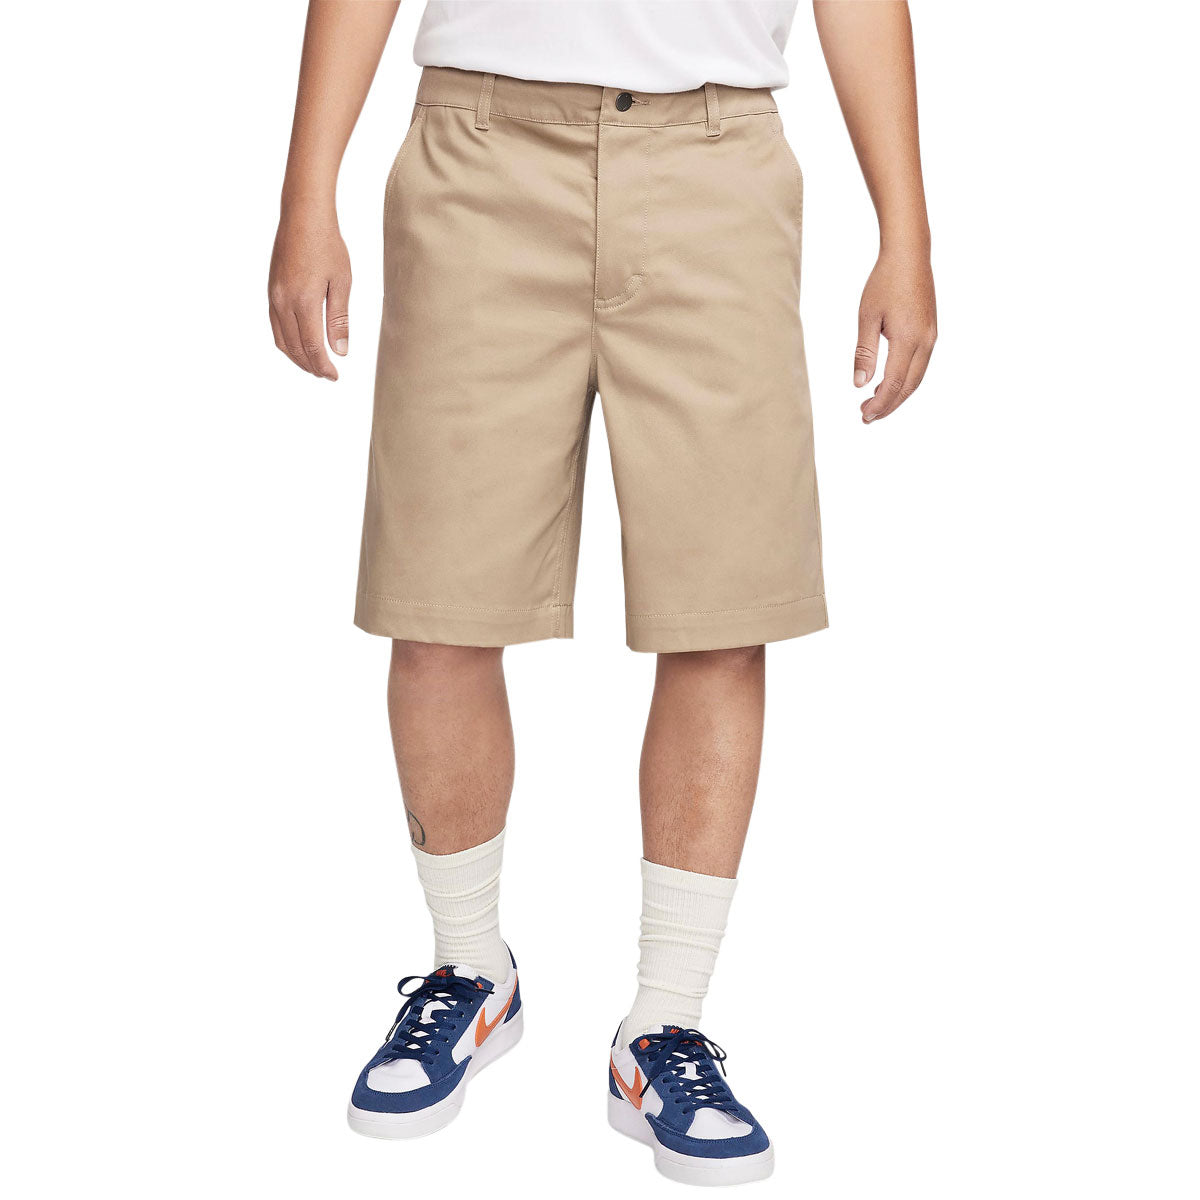 Nike El Chino Shorts - Khaki image 5